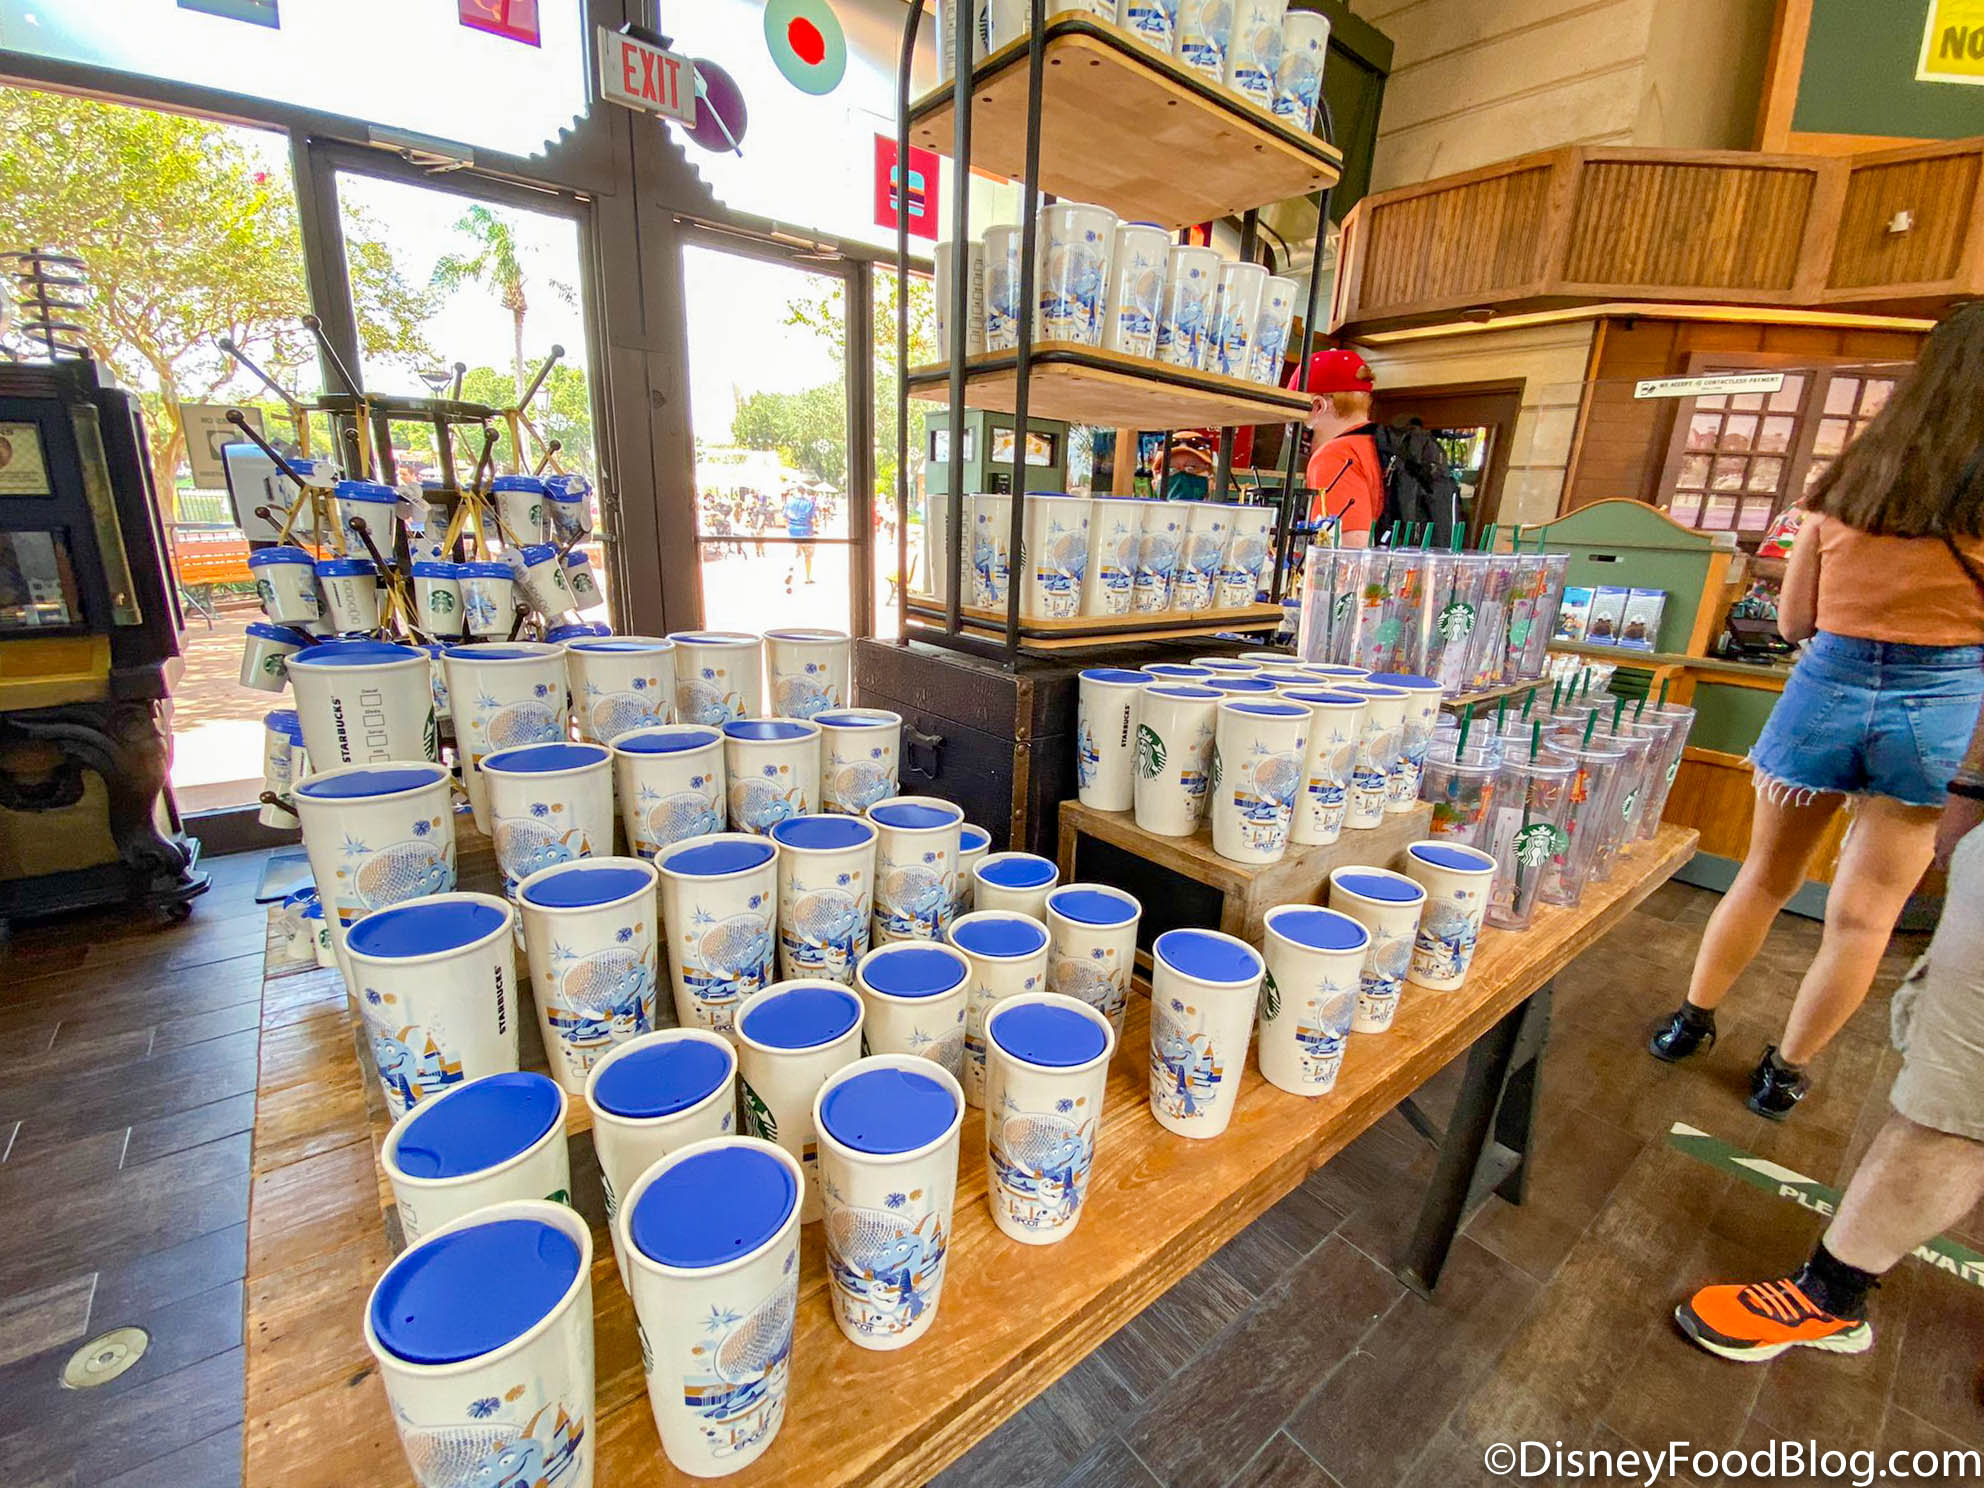 Walt Disney World 50th Anniversary Starbucks Animal Kingdom Tumbler Mug Cup  12oz